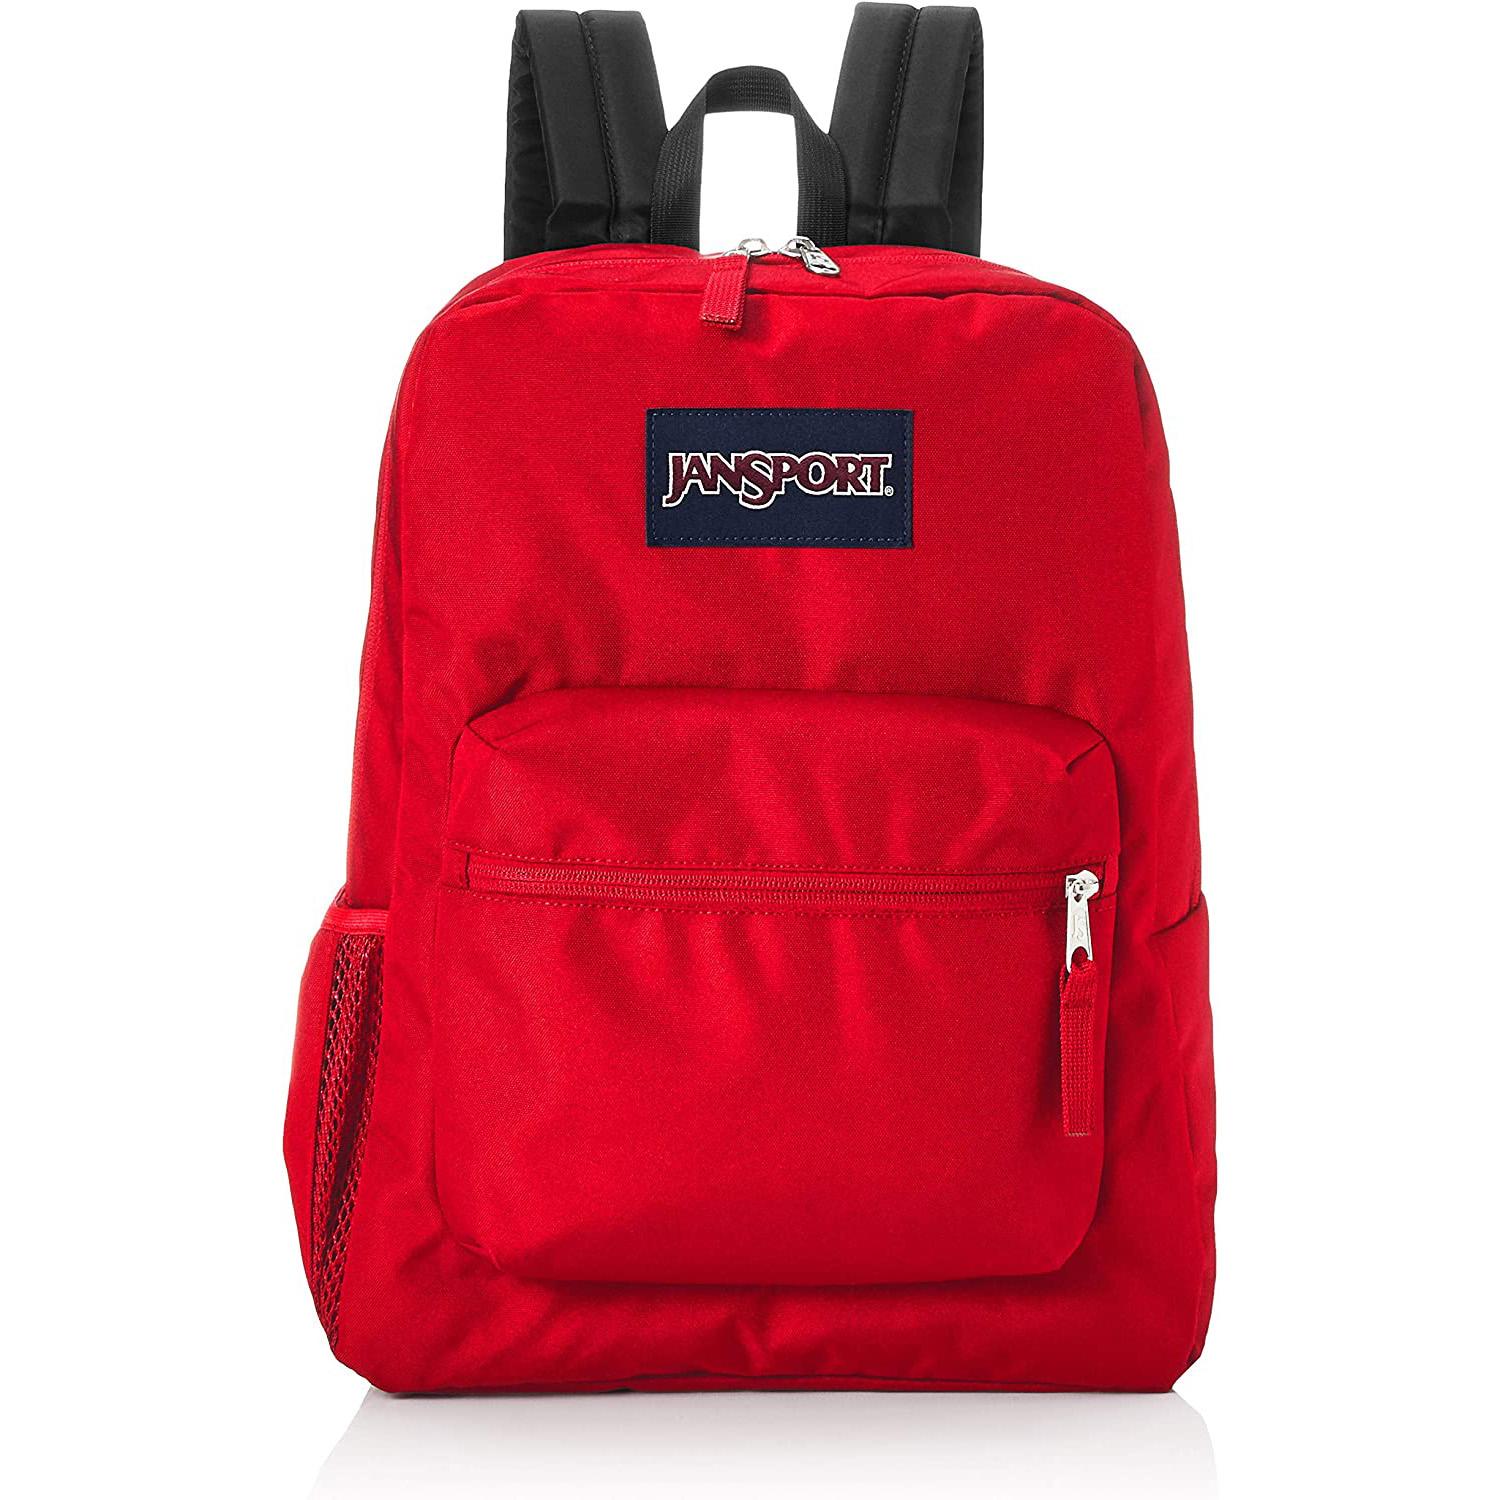 JanSport Cross Town Backpack for $17.28